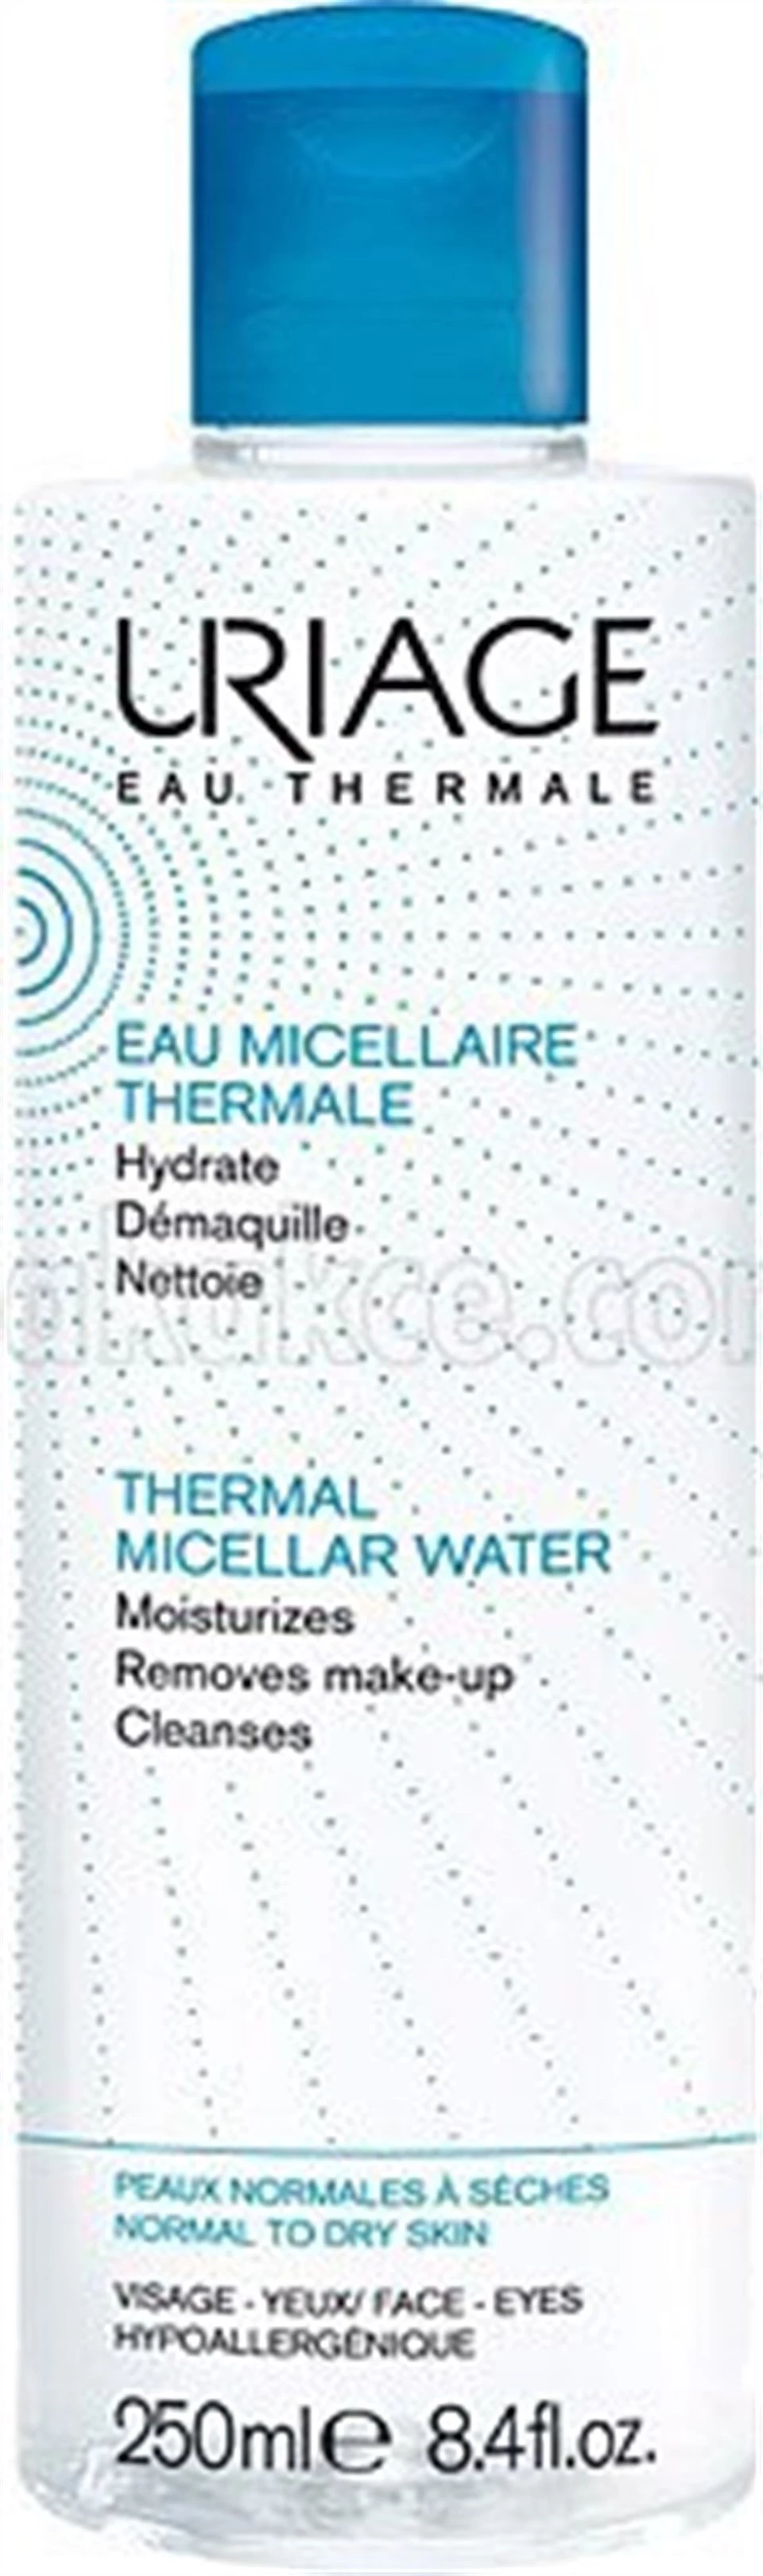 Uriage Eau Thermal Micellar Water - Normal ve Kuru Ciltler -PNS